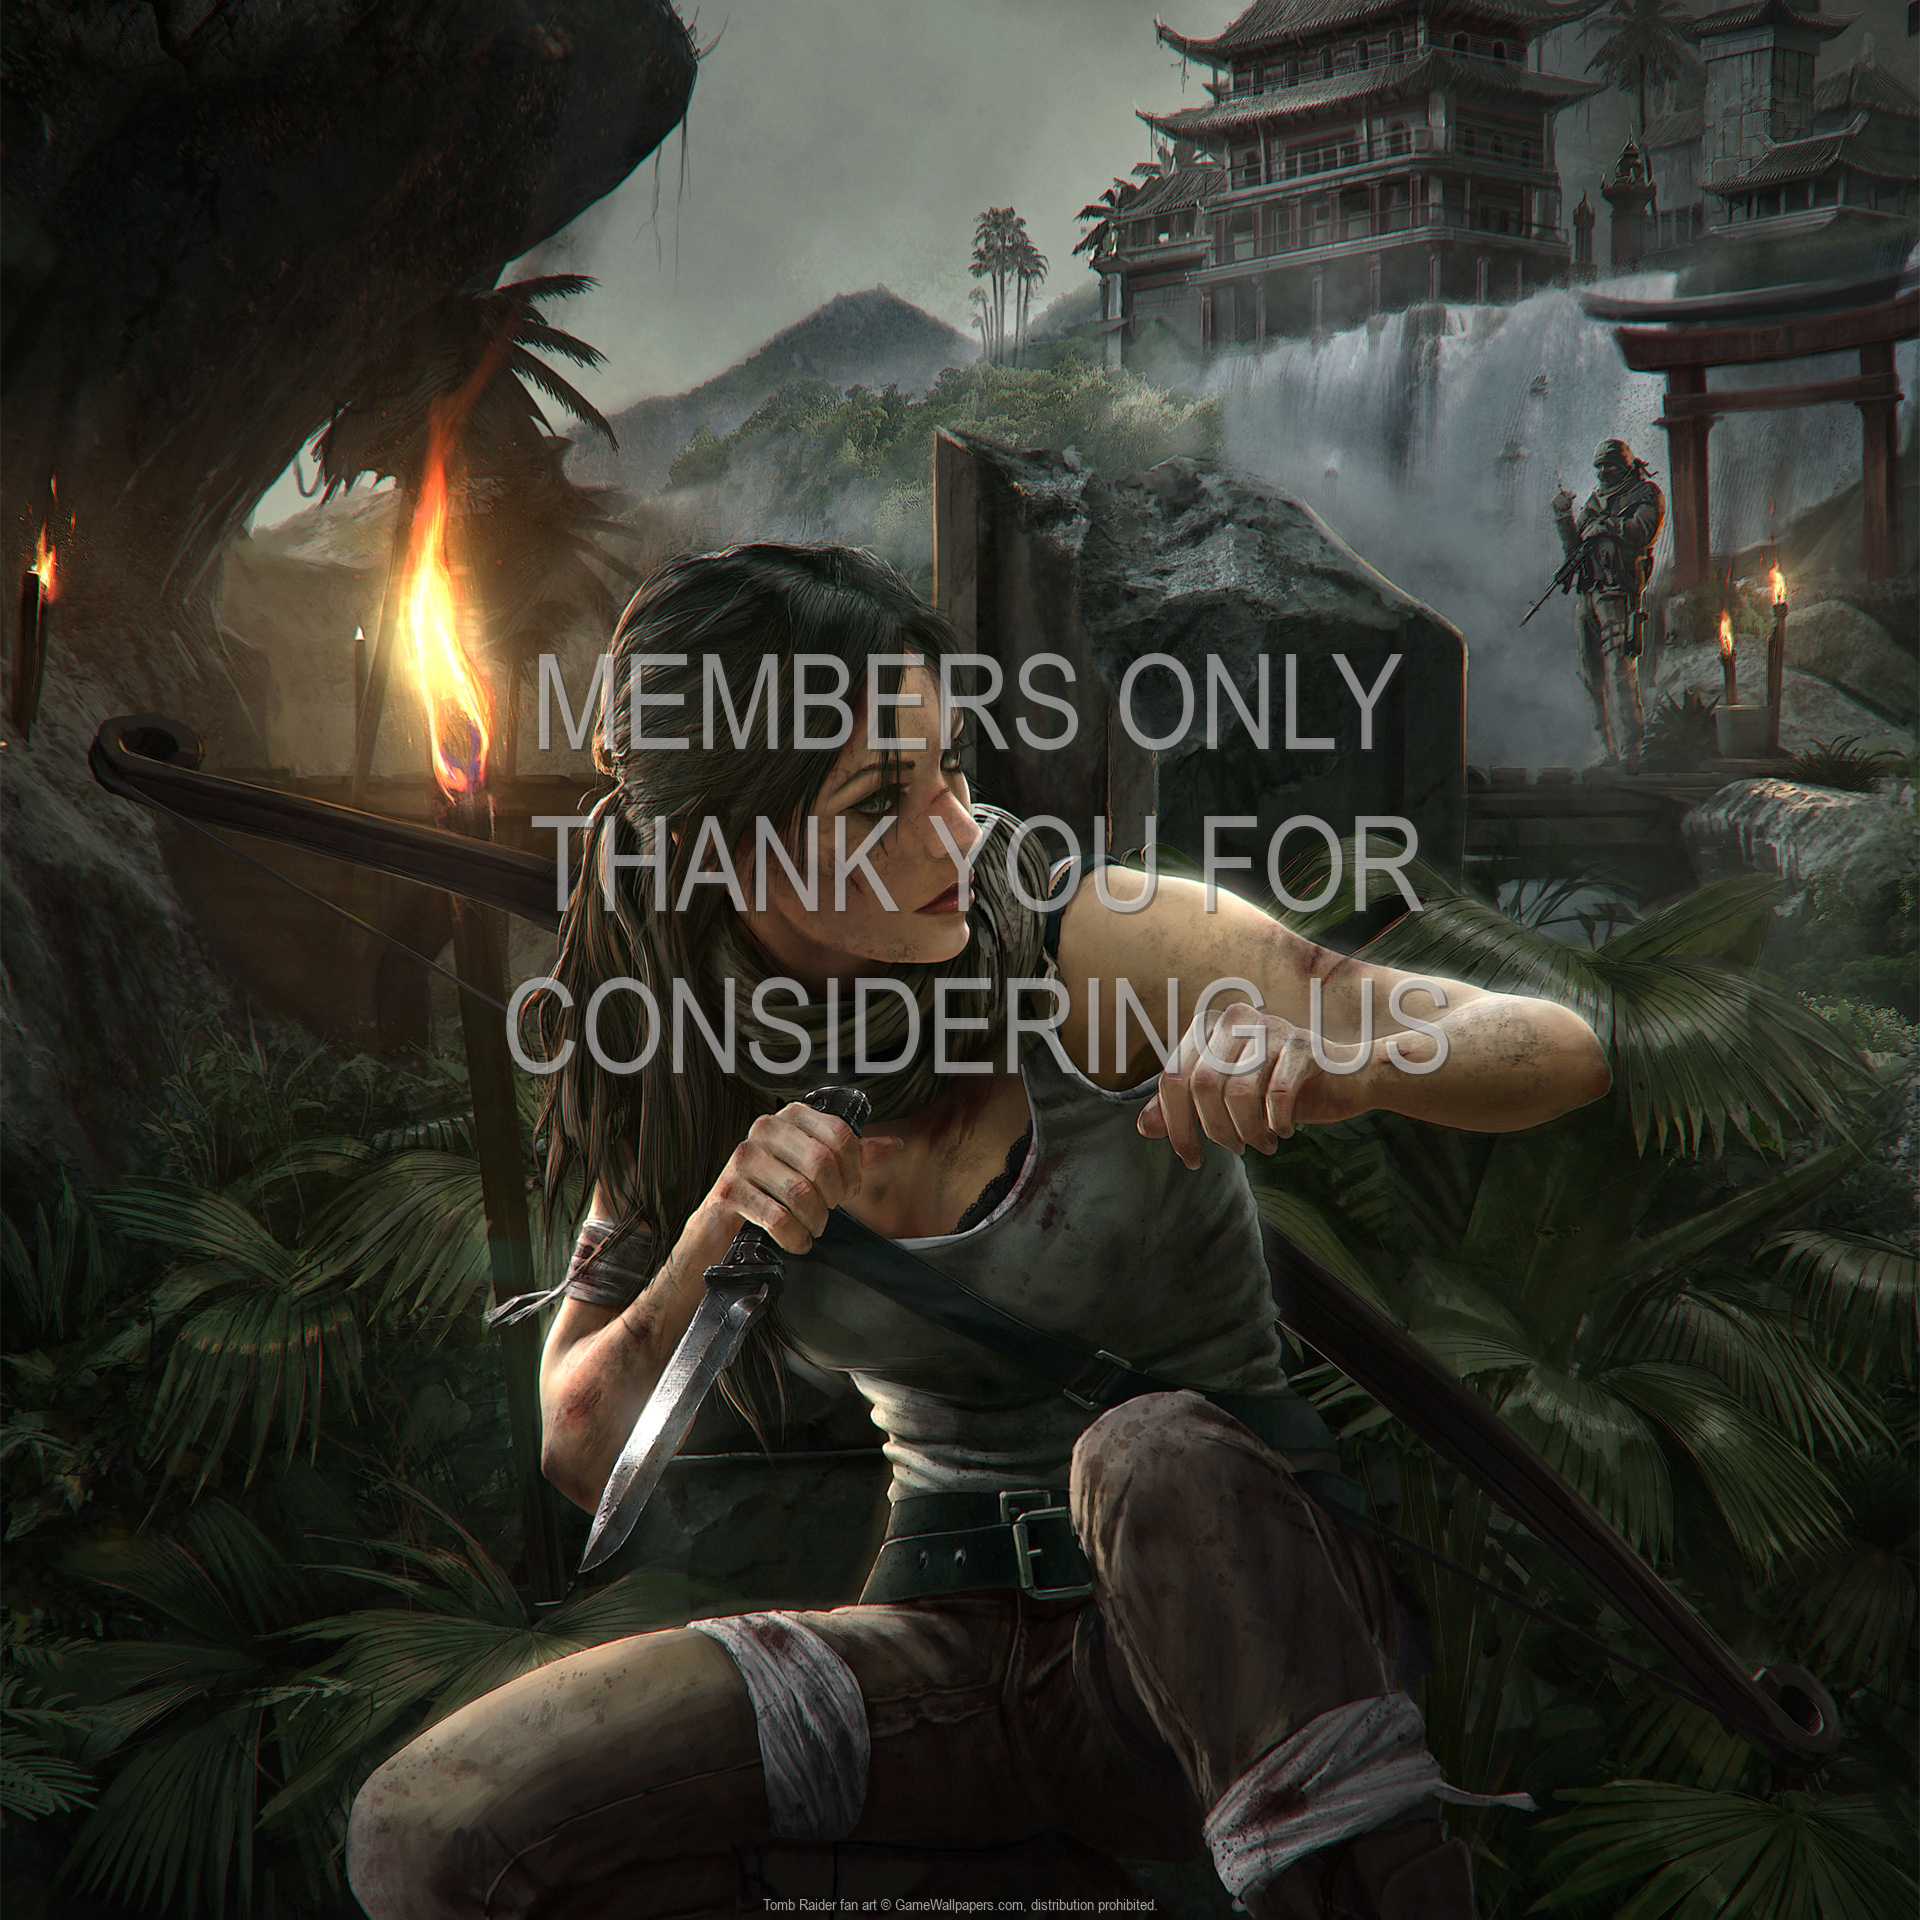 Tomb Raider fan art 1080p%20Horizontal Mobile wallpaper or background 09